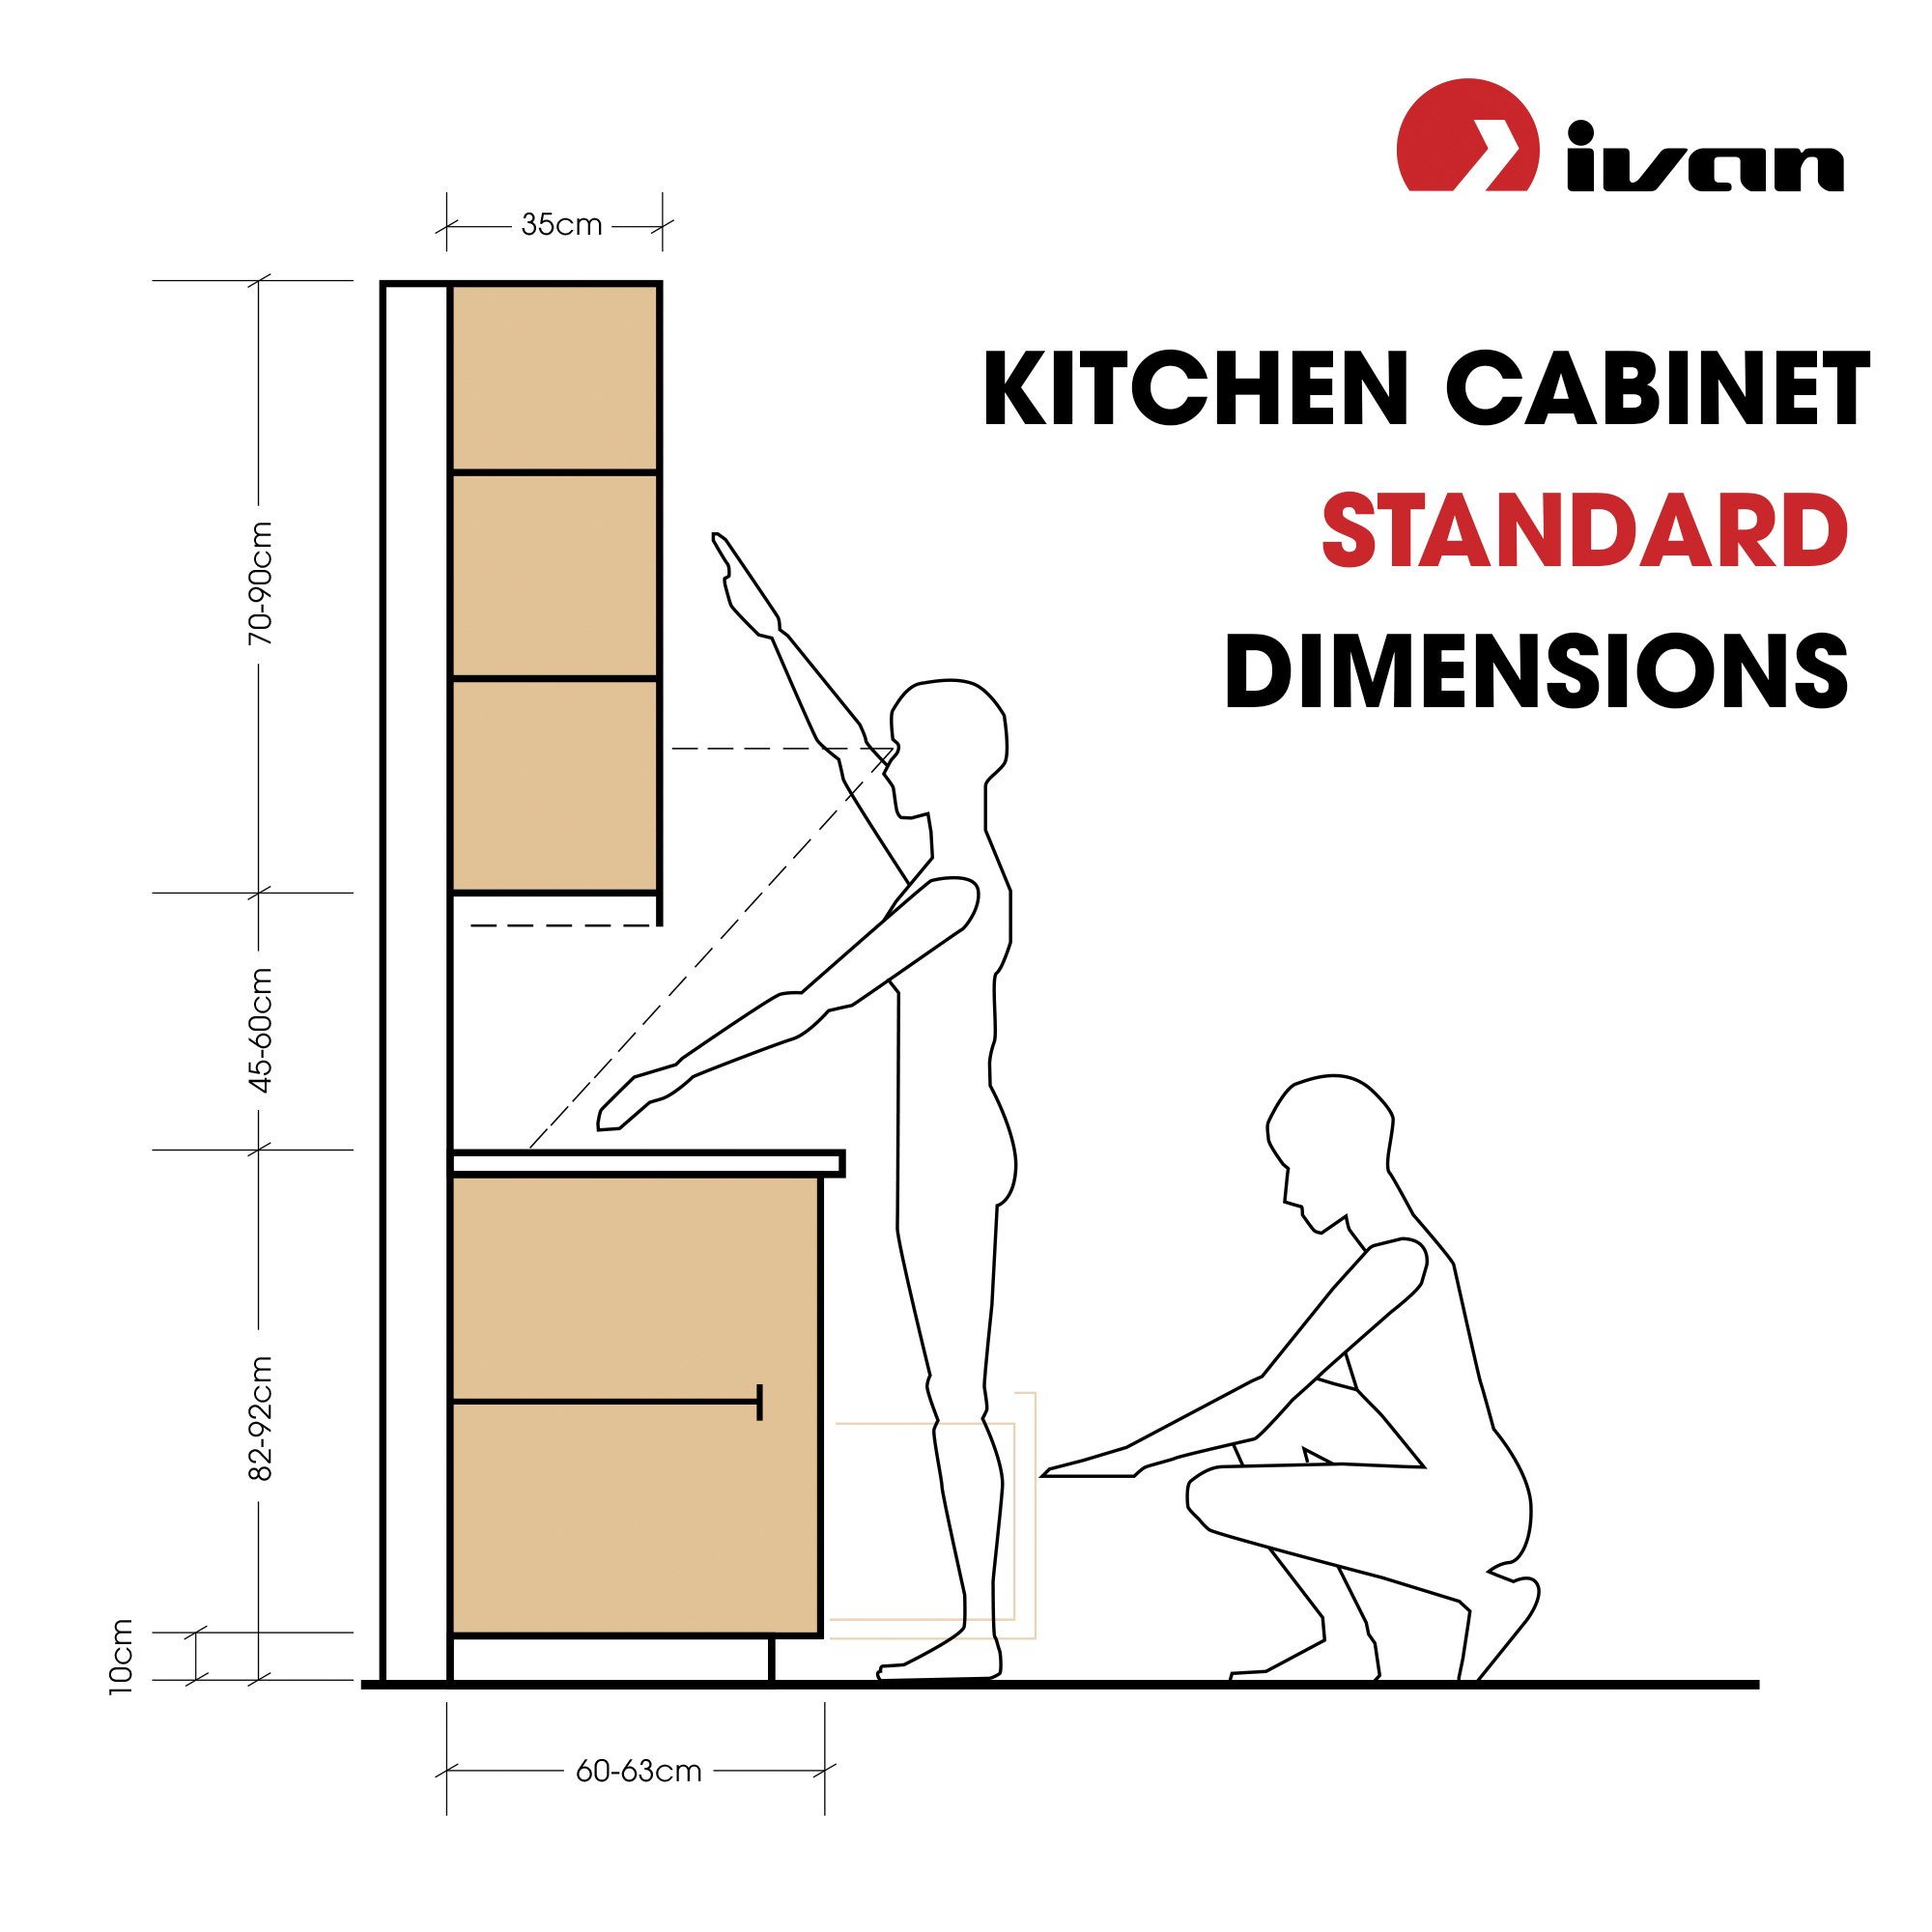  standard kitchen cabinet dimensions